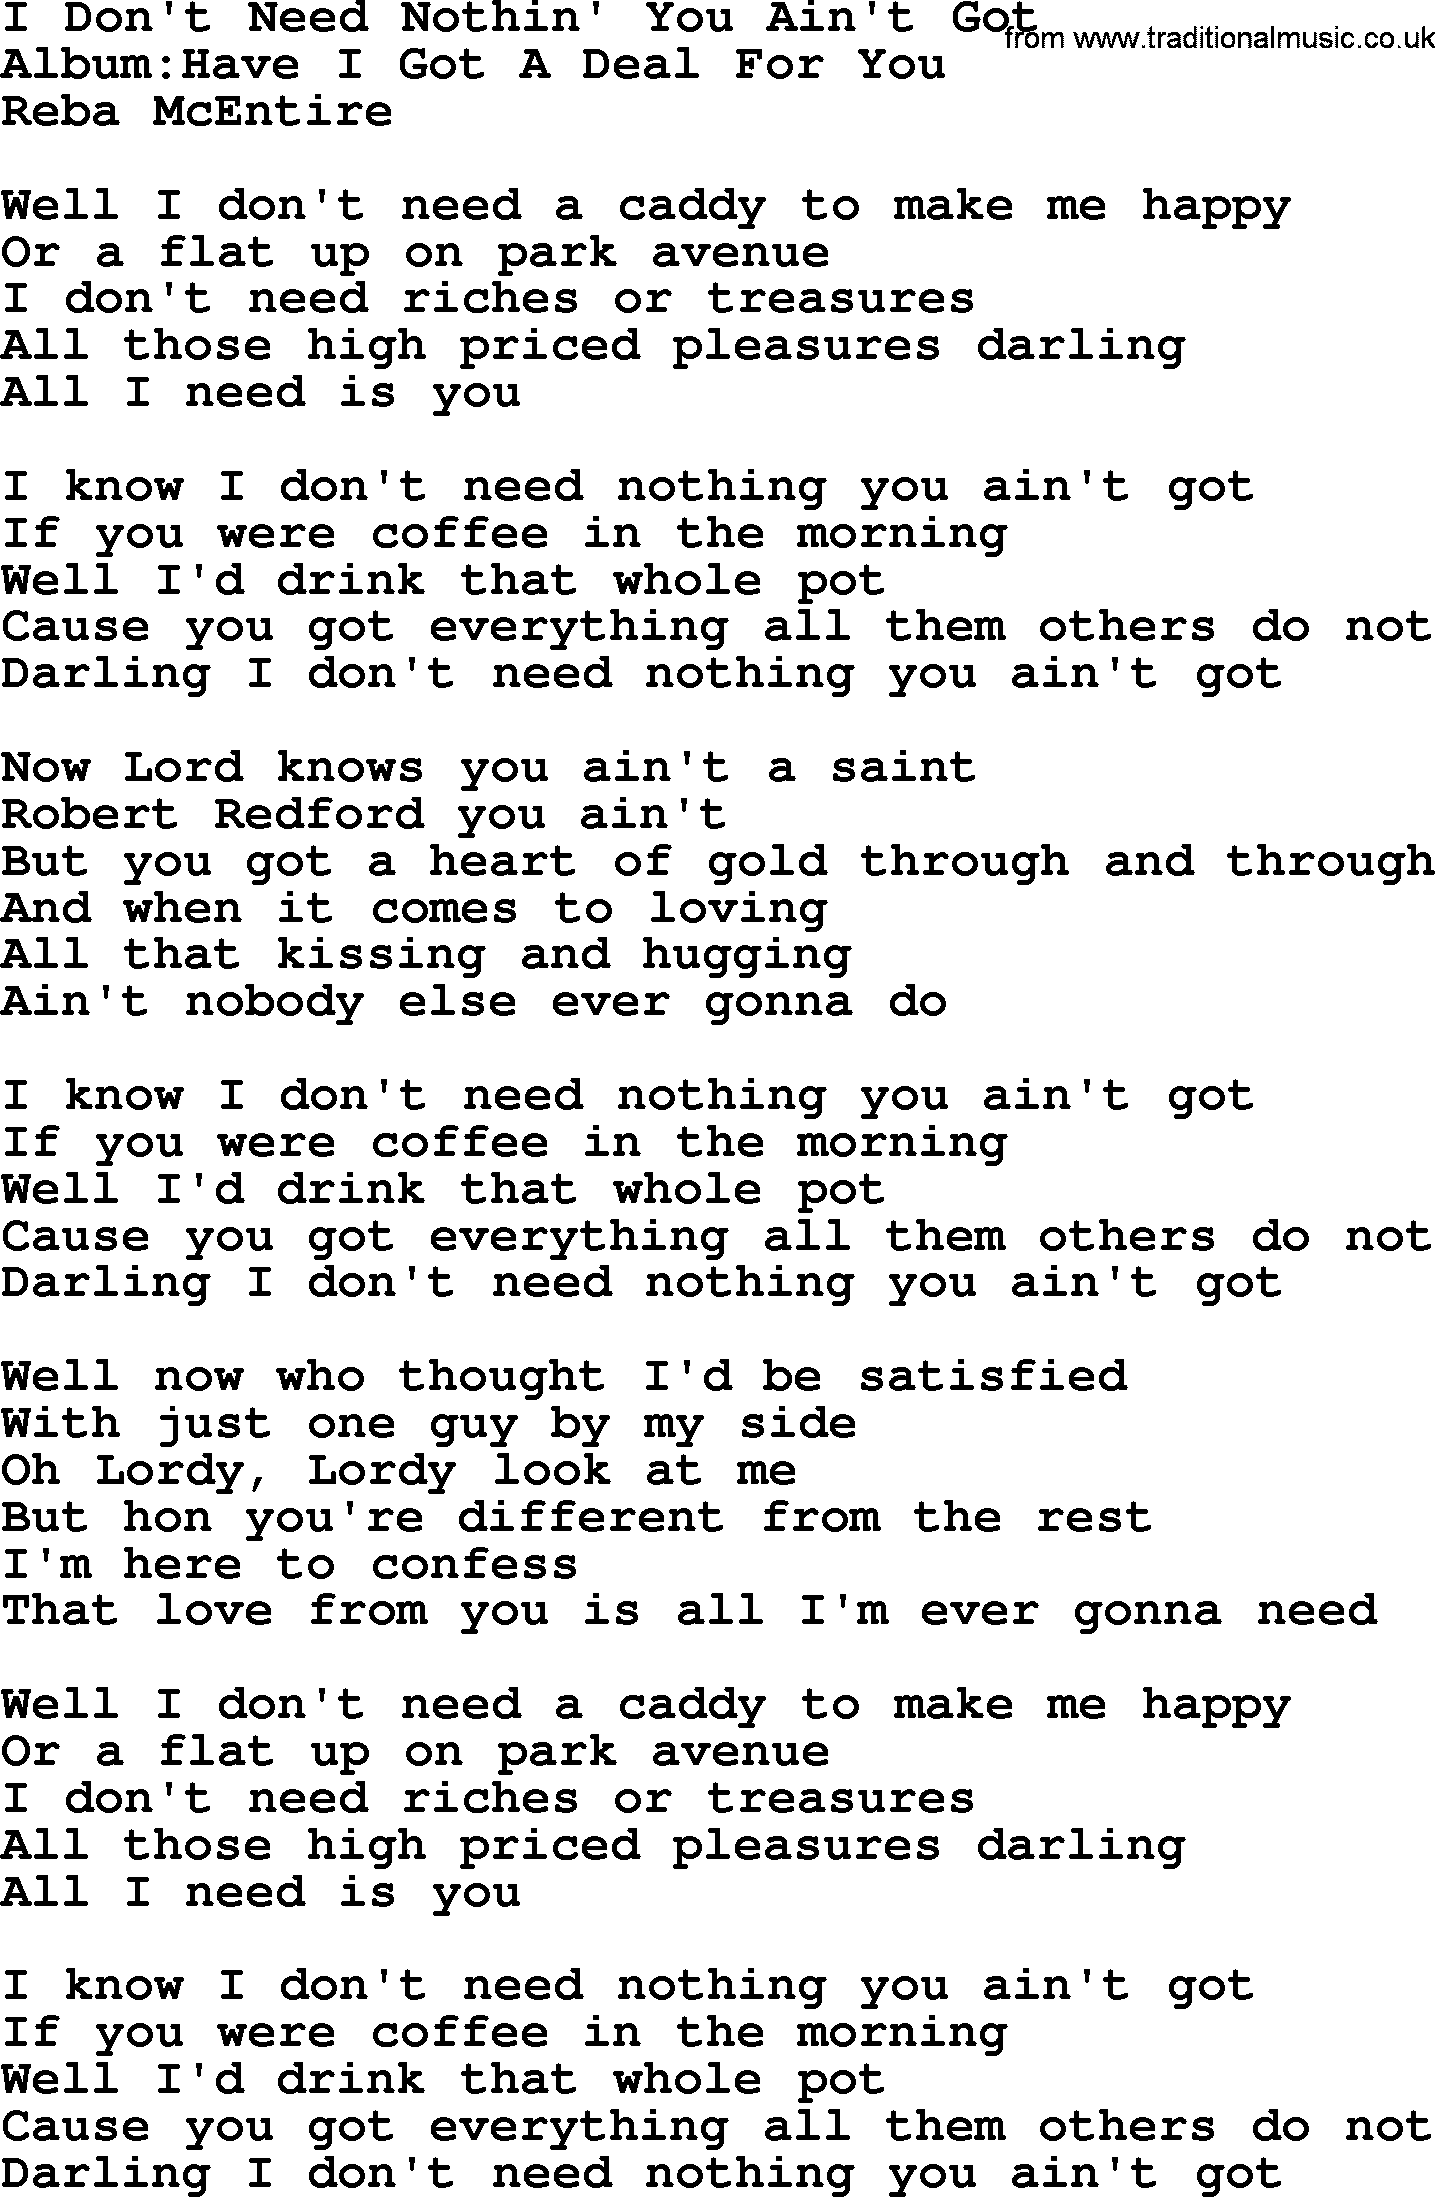 Reba McEntire song: I Don't Need Nothin' You Ain't Got lyrics